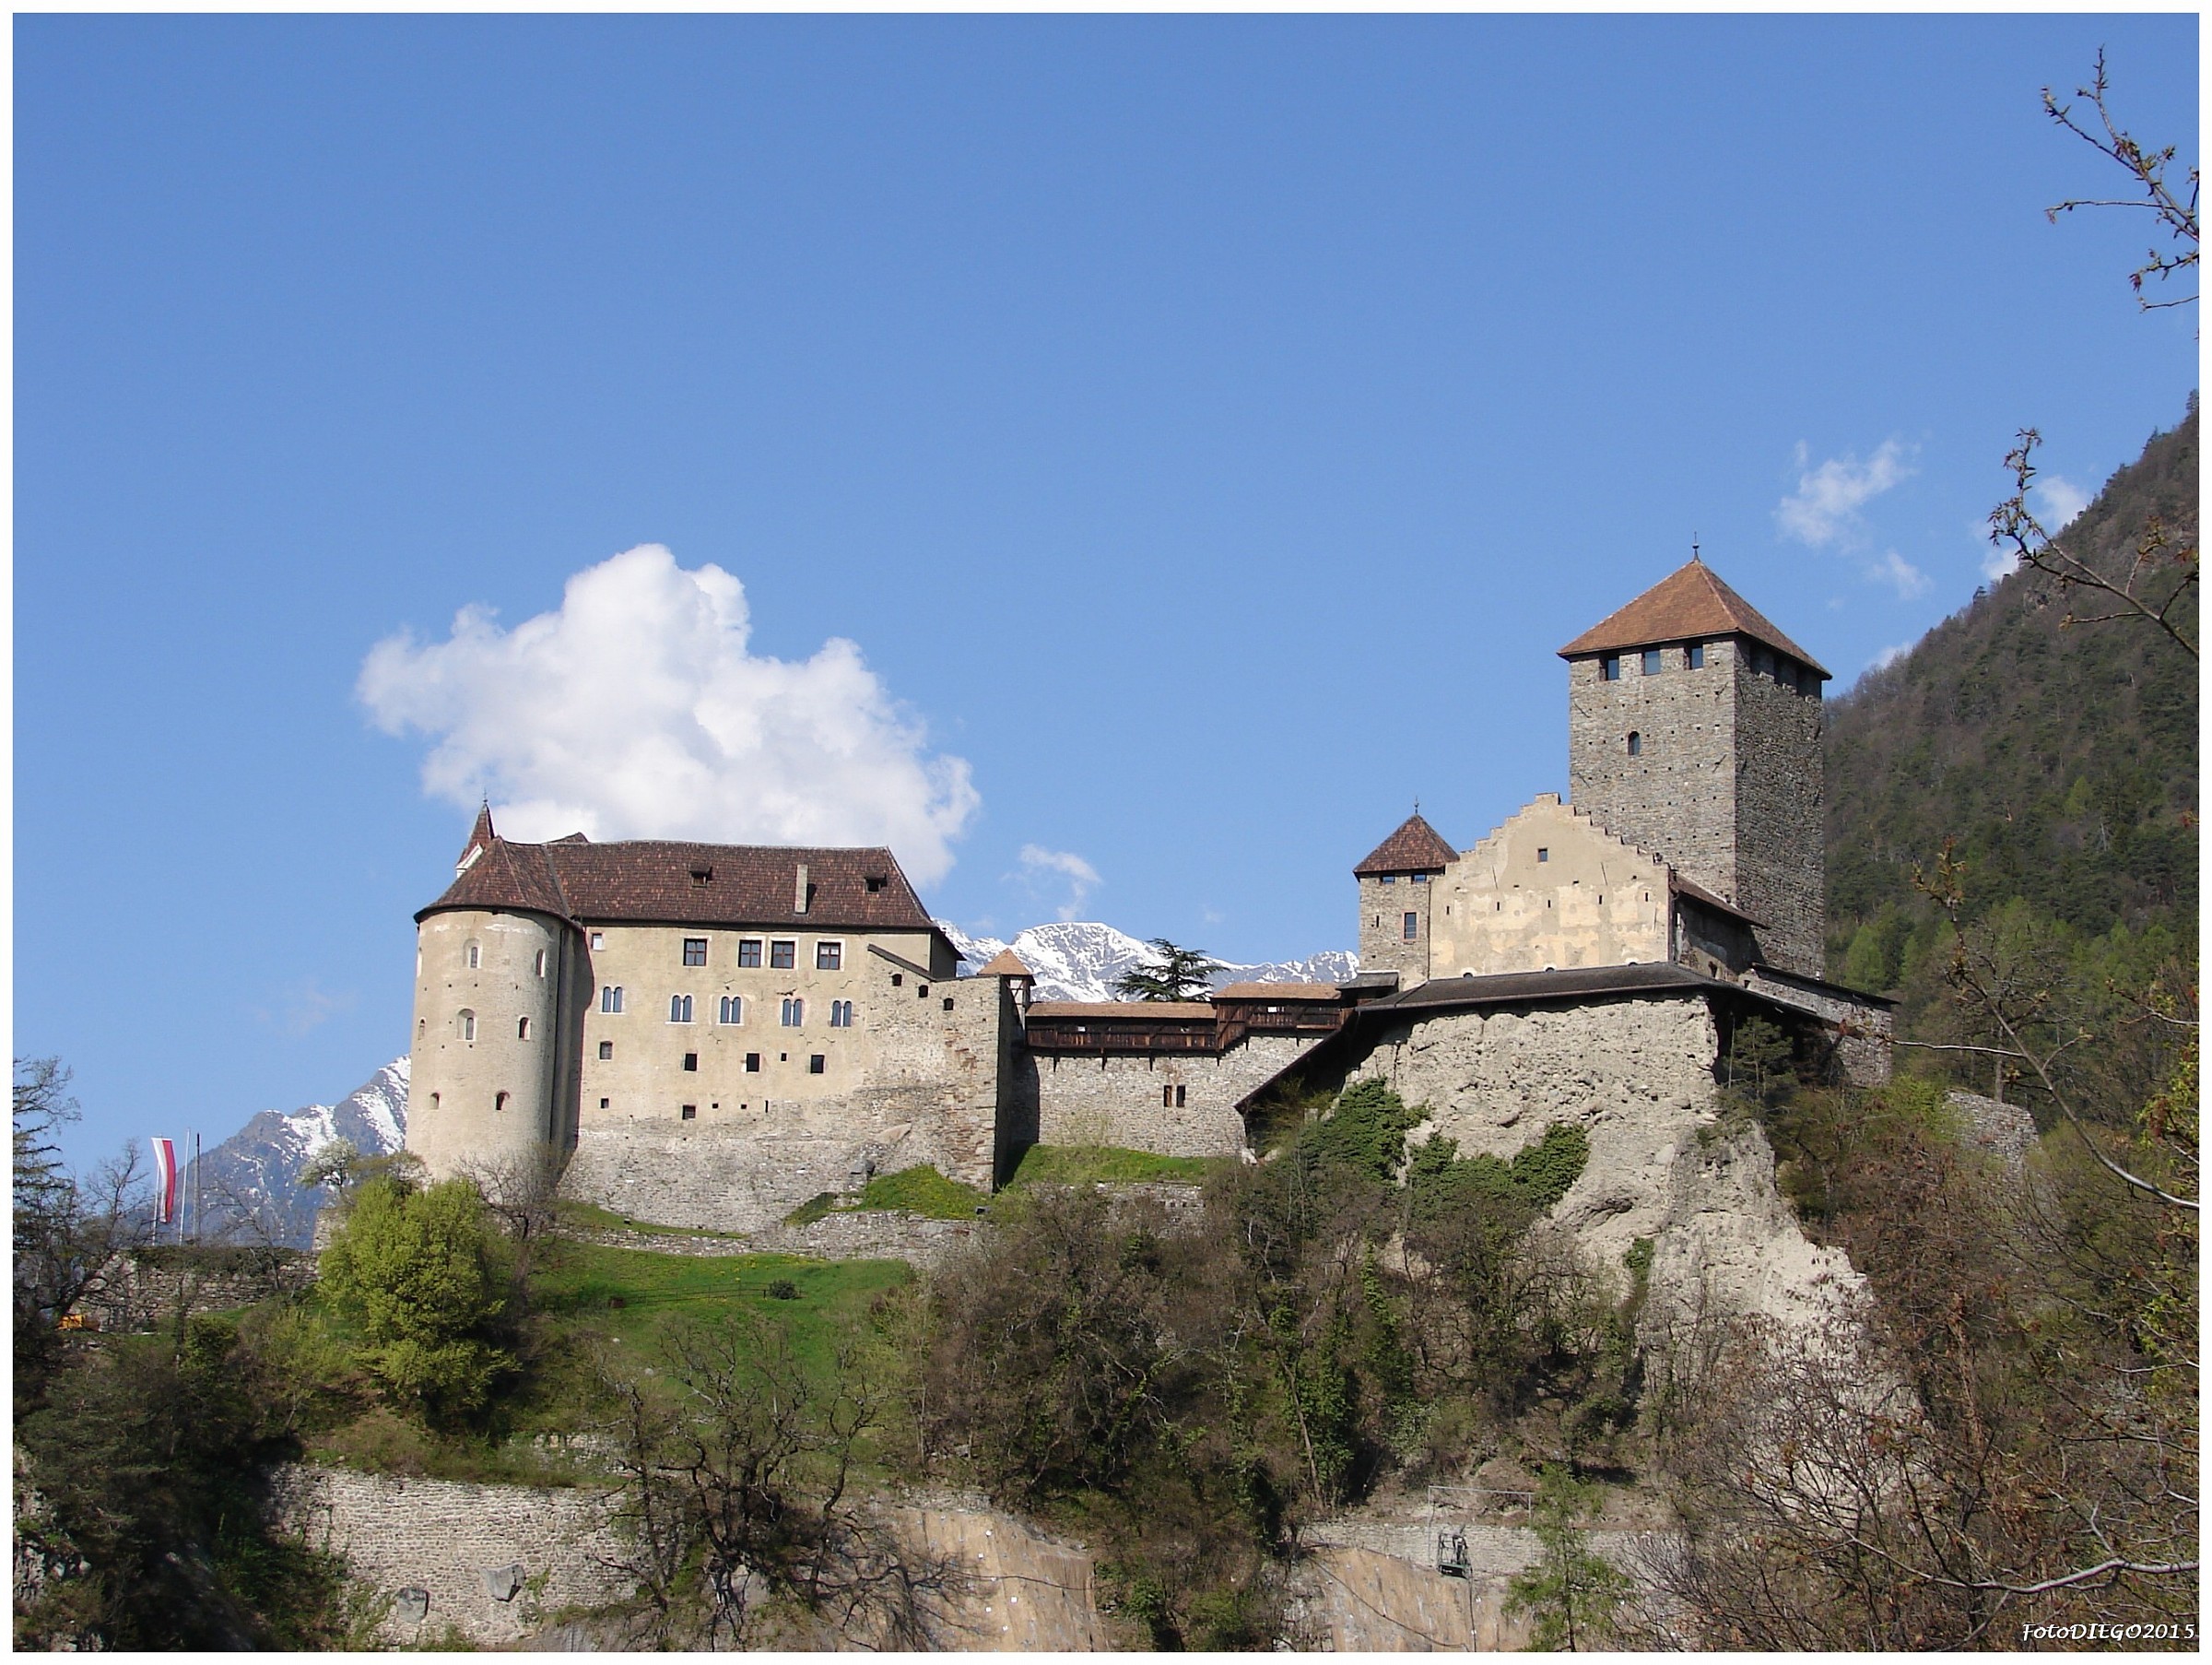 Tirolo - Il castello...